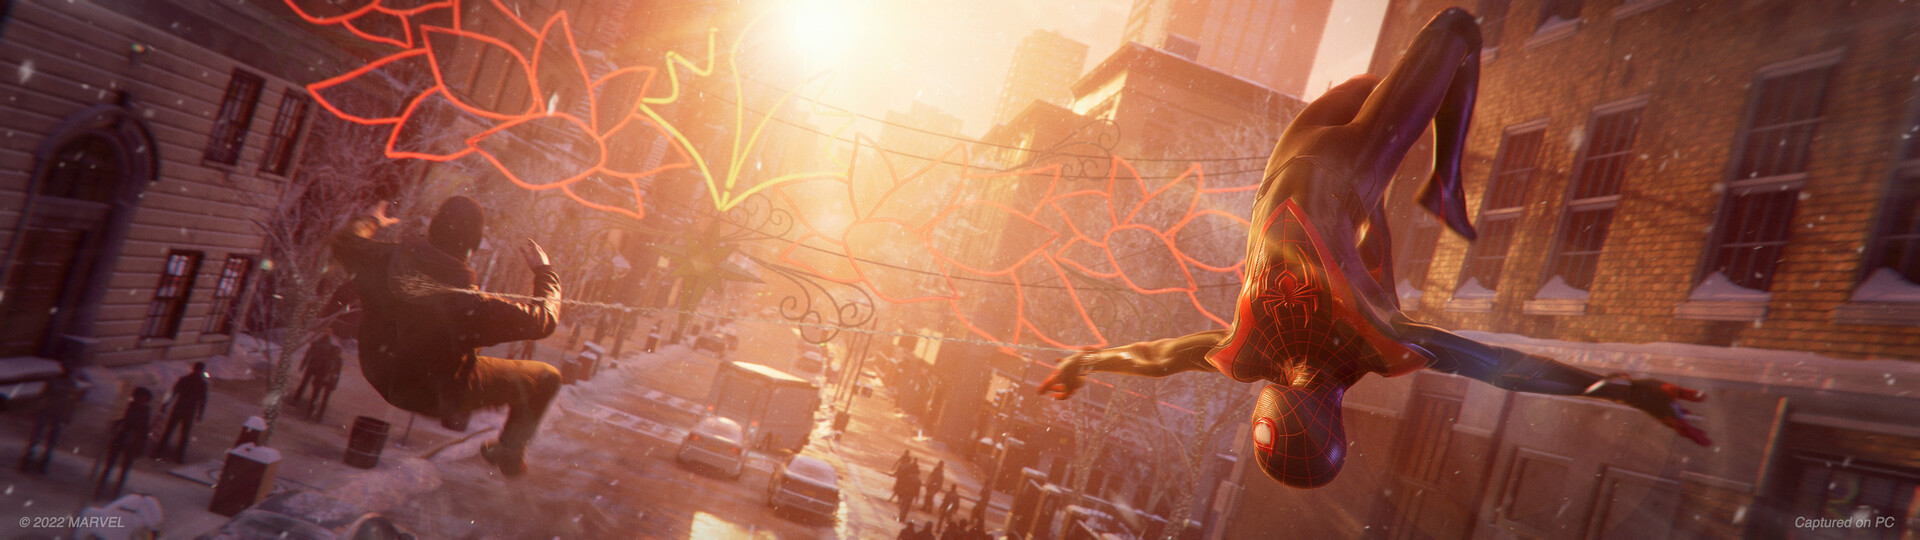 Marvel's Spider-Man Remastered on Steam